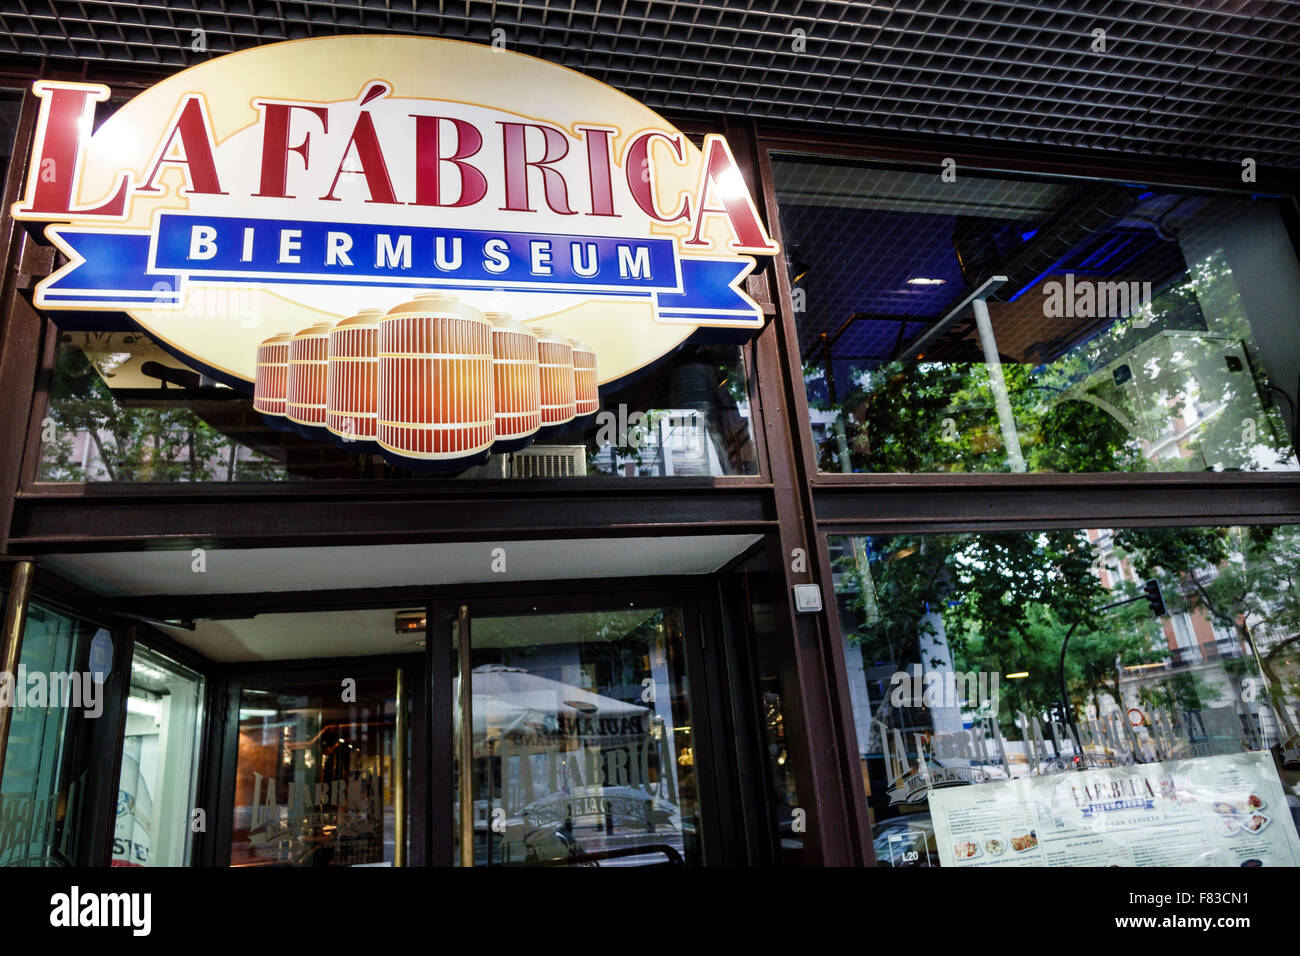 Madrid Spain,Hispanic Chamberi,Calle de Genova,La Fabrica,Biermuseum,brewery,beer museum,restaurant restaurants food dining cafe cafes,sign,entrance,S Stock Photo